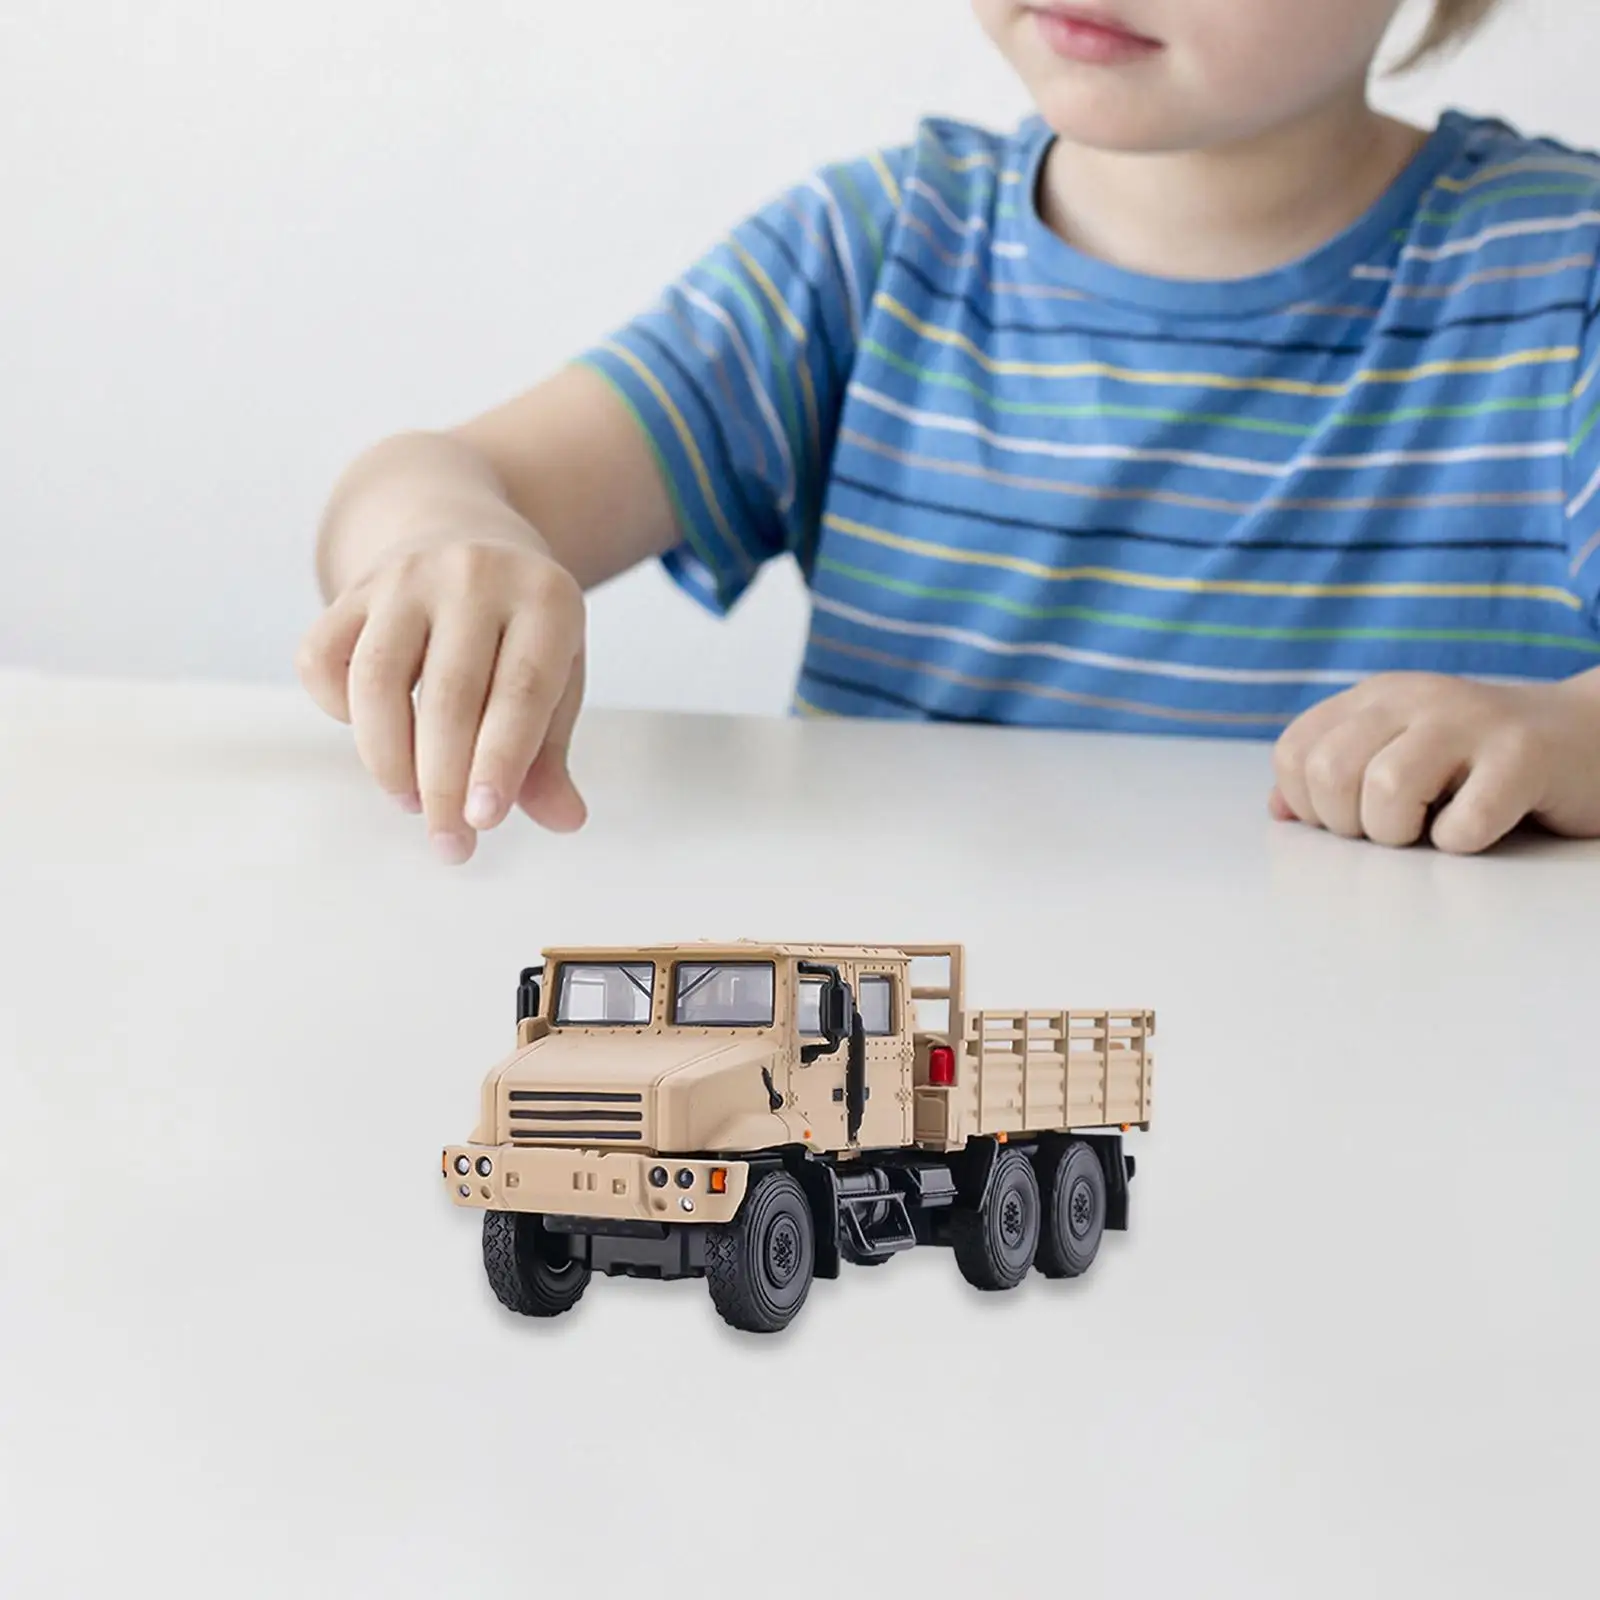 1/64 Diecast Model Car Truck Diecast Car for Kids Gifts Boy Girl Children